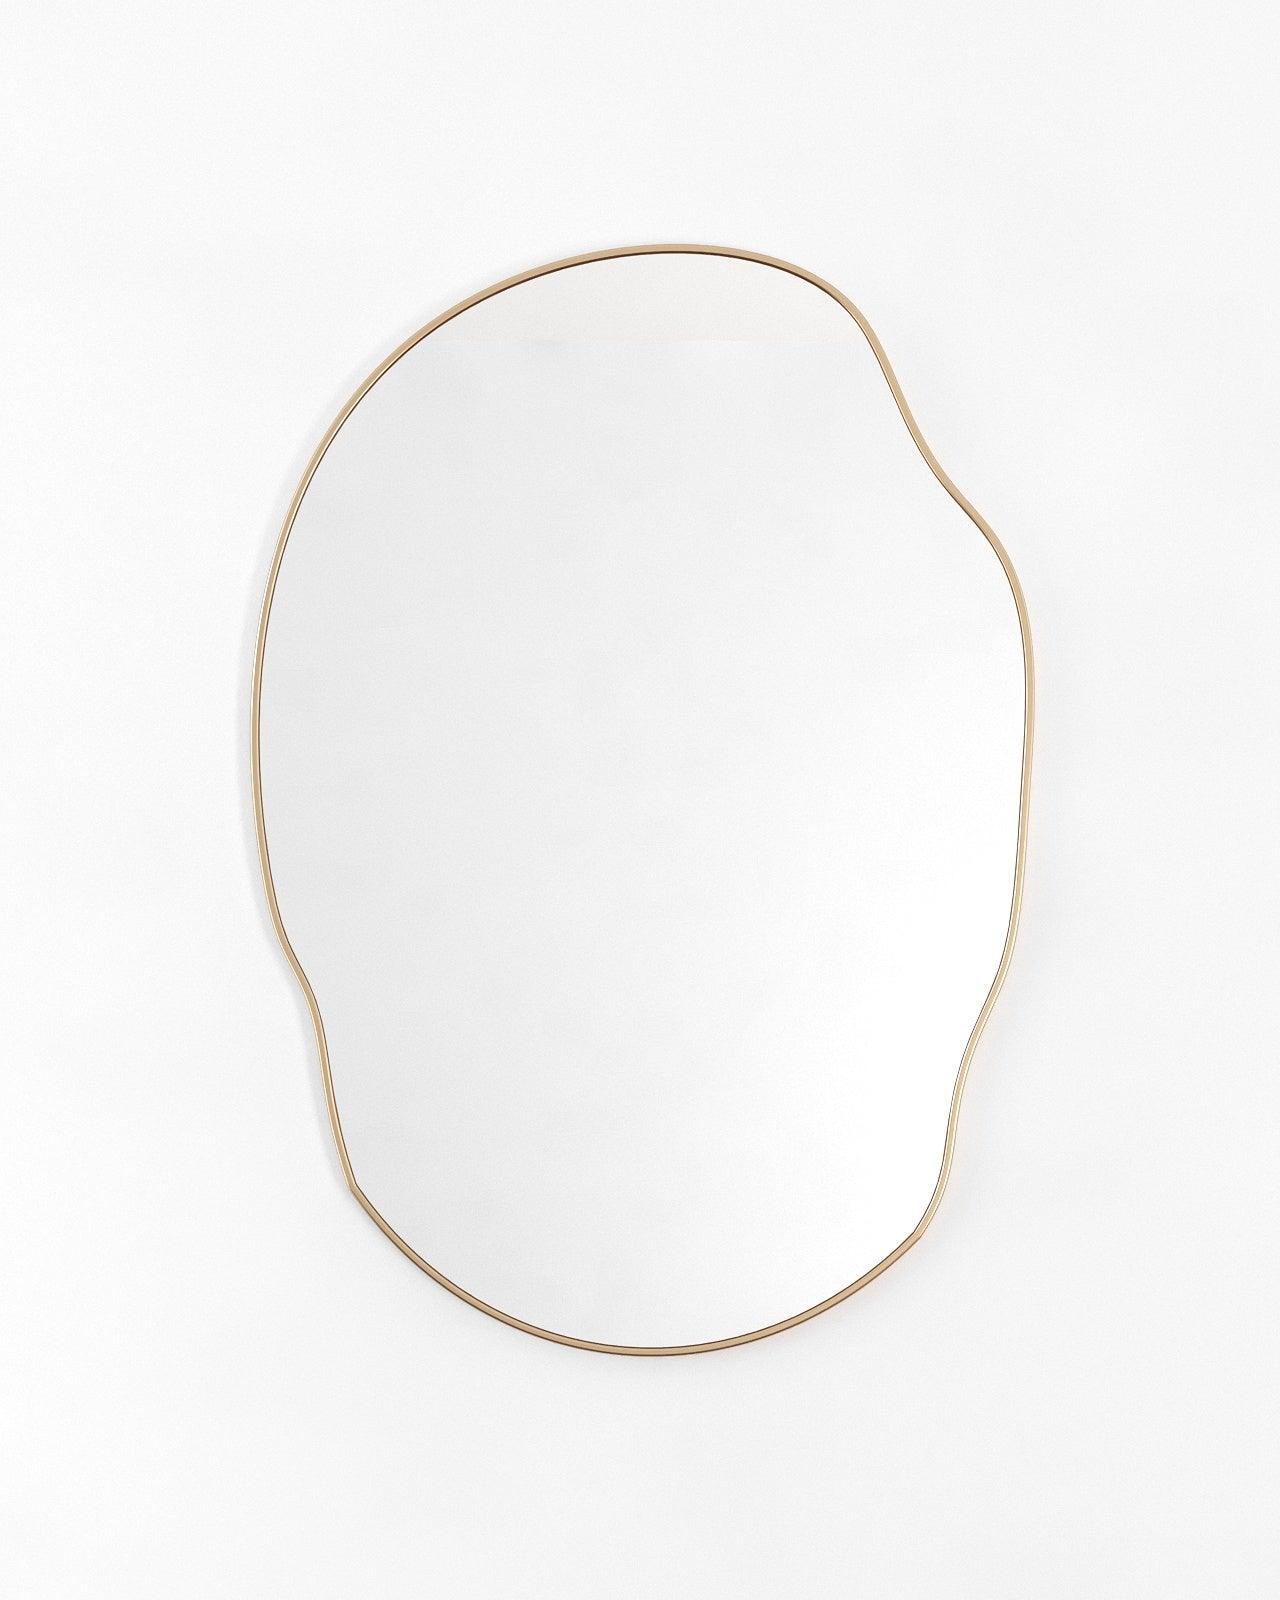 Silva Mirror by Irregular Mirrors Collection